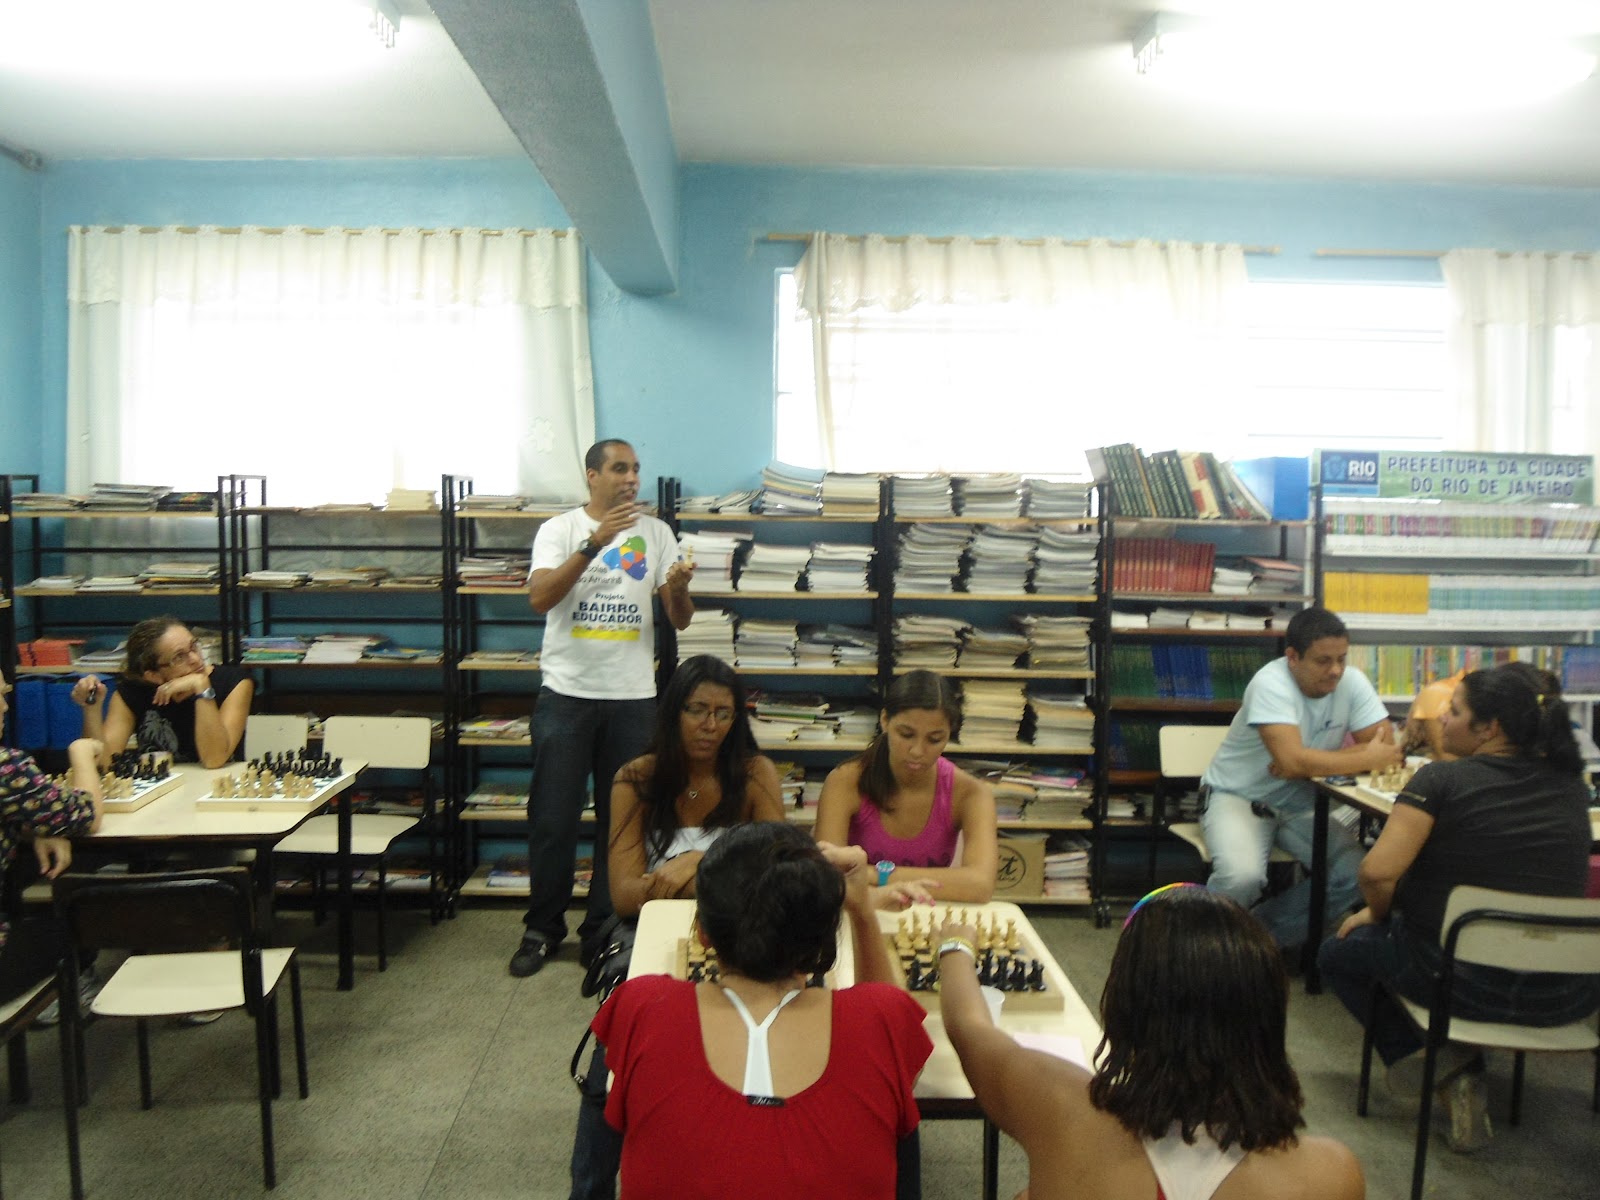 Sala de aula de xadrez bem organizada